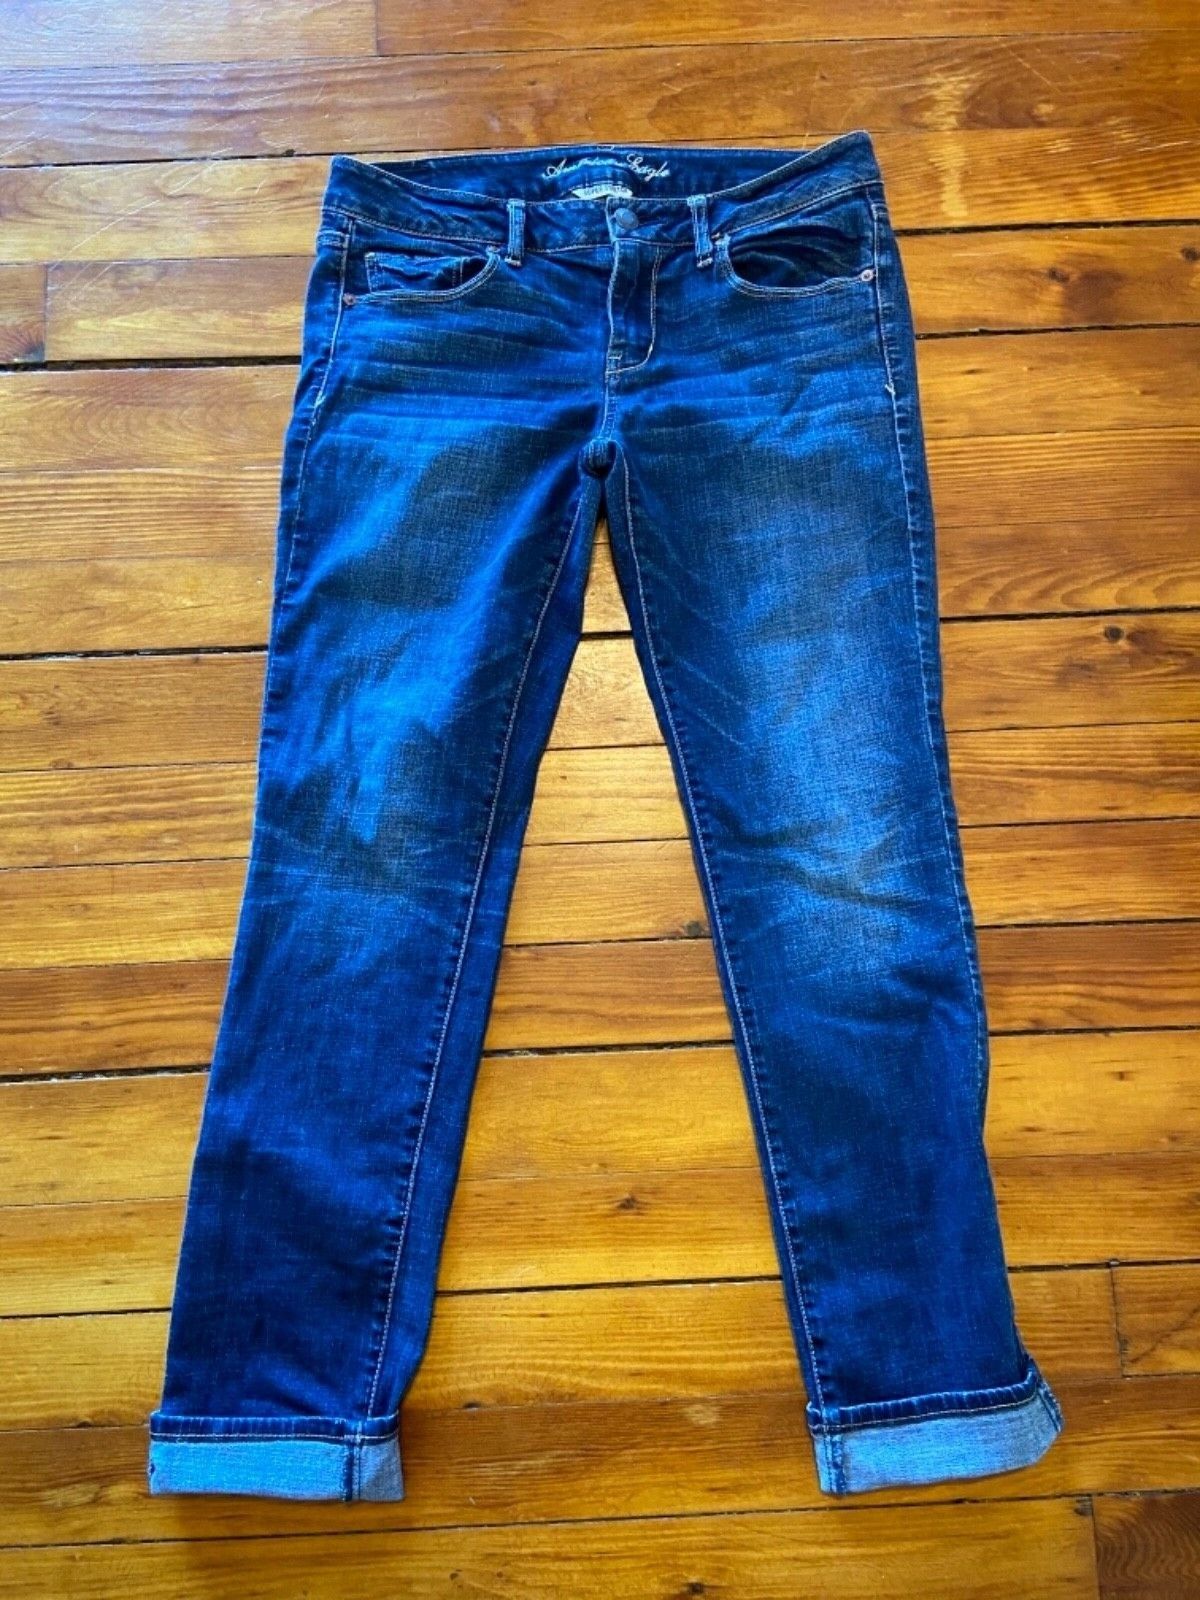 Womens jeans lot (6pairs) American Eagle, Gap, Joes sizes 8-12  Joe's Jeans